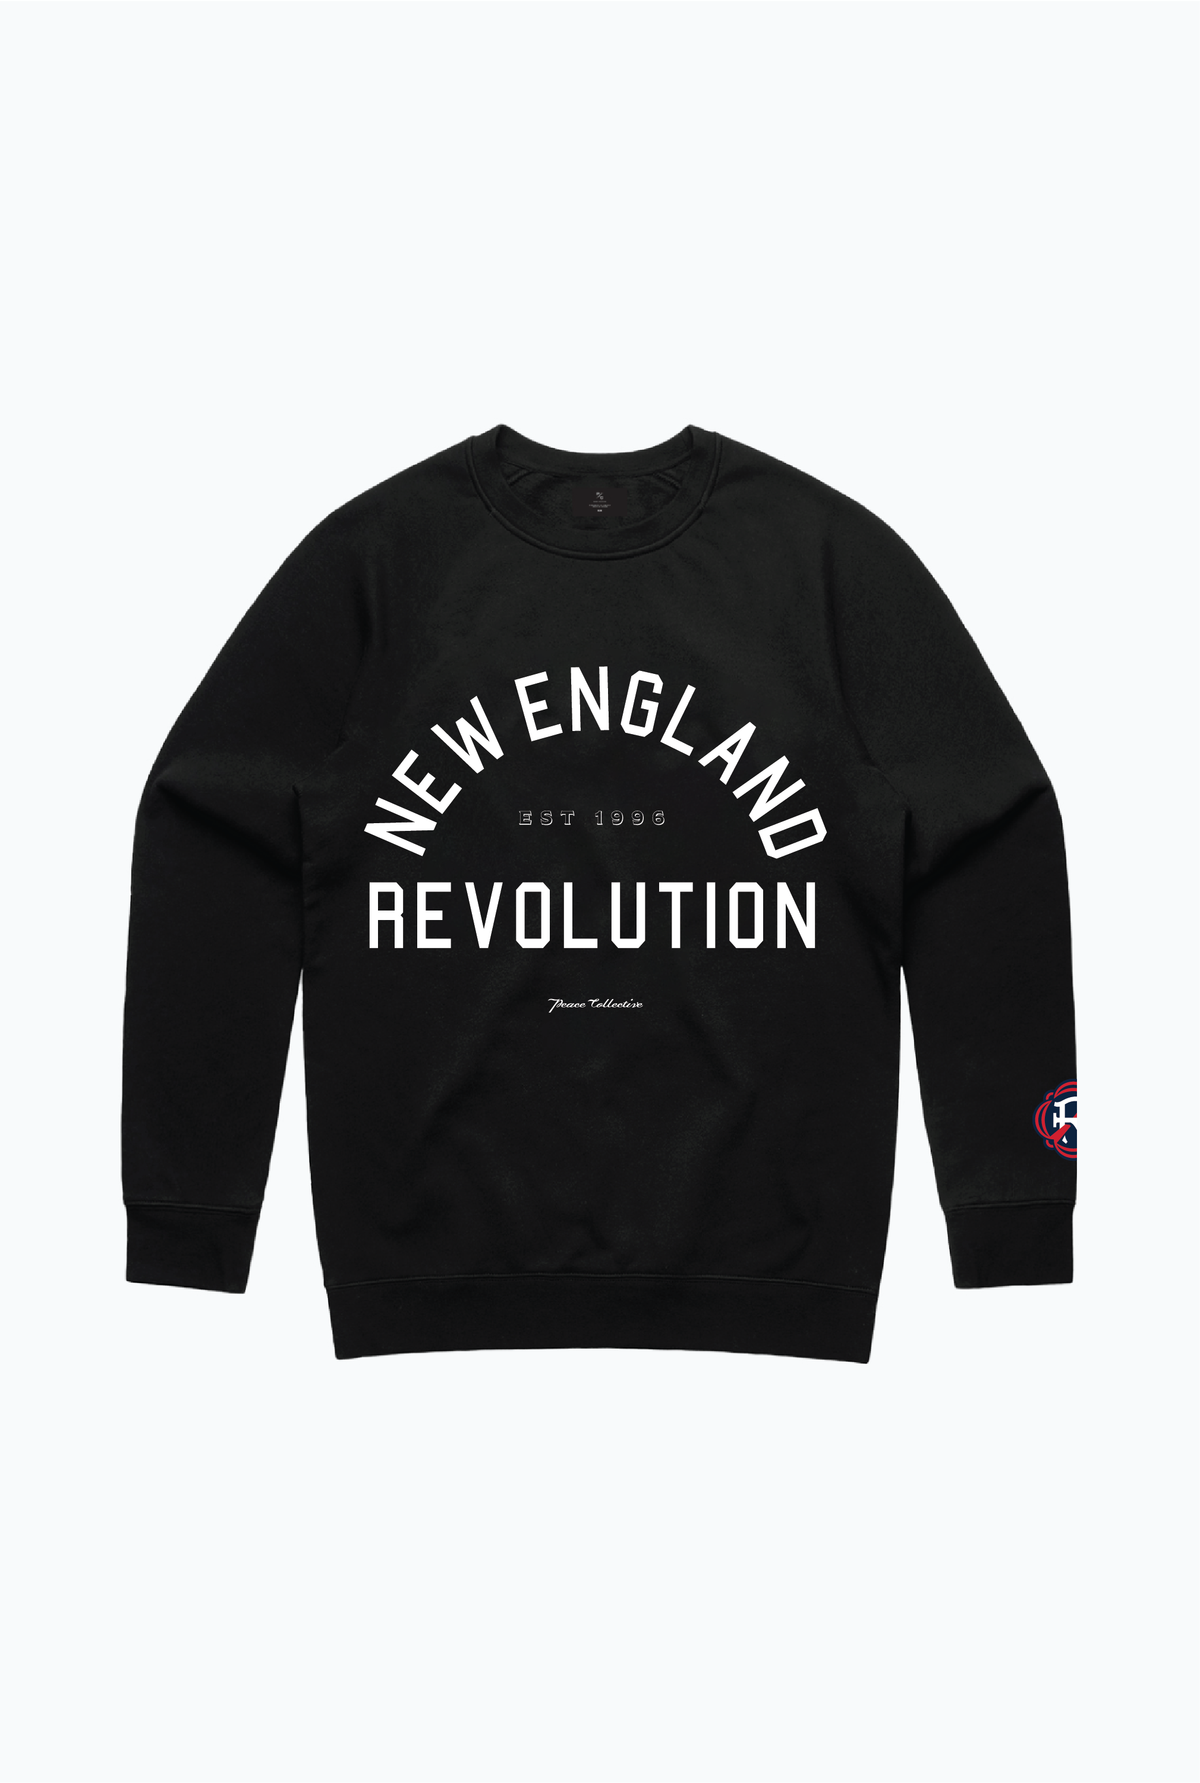 New England Revolution Essentials Heavyweight Crewneck - Black